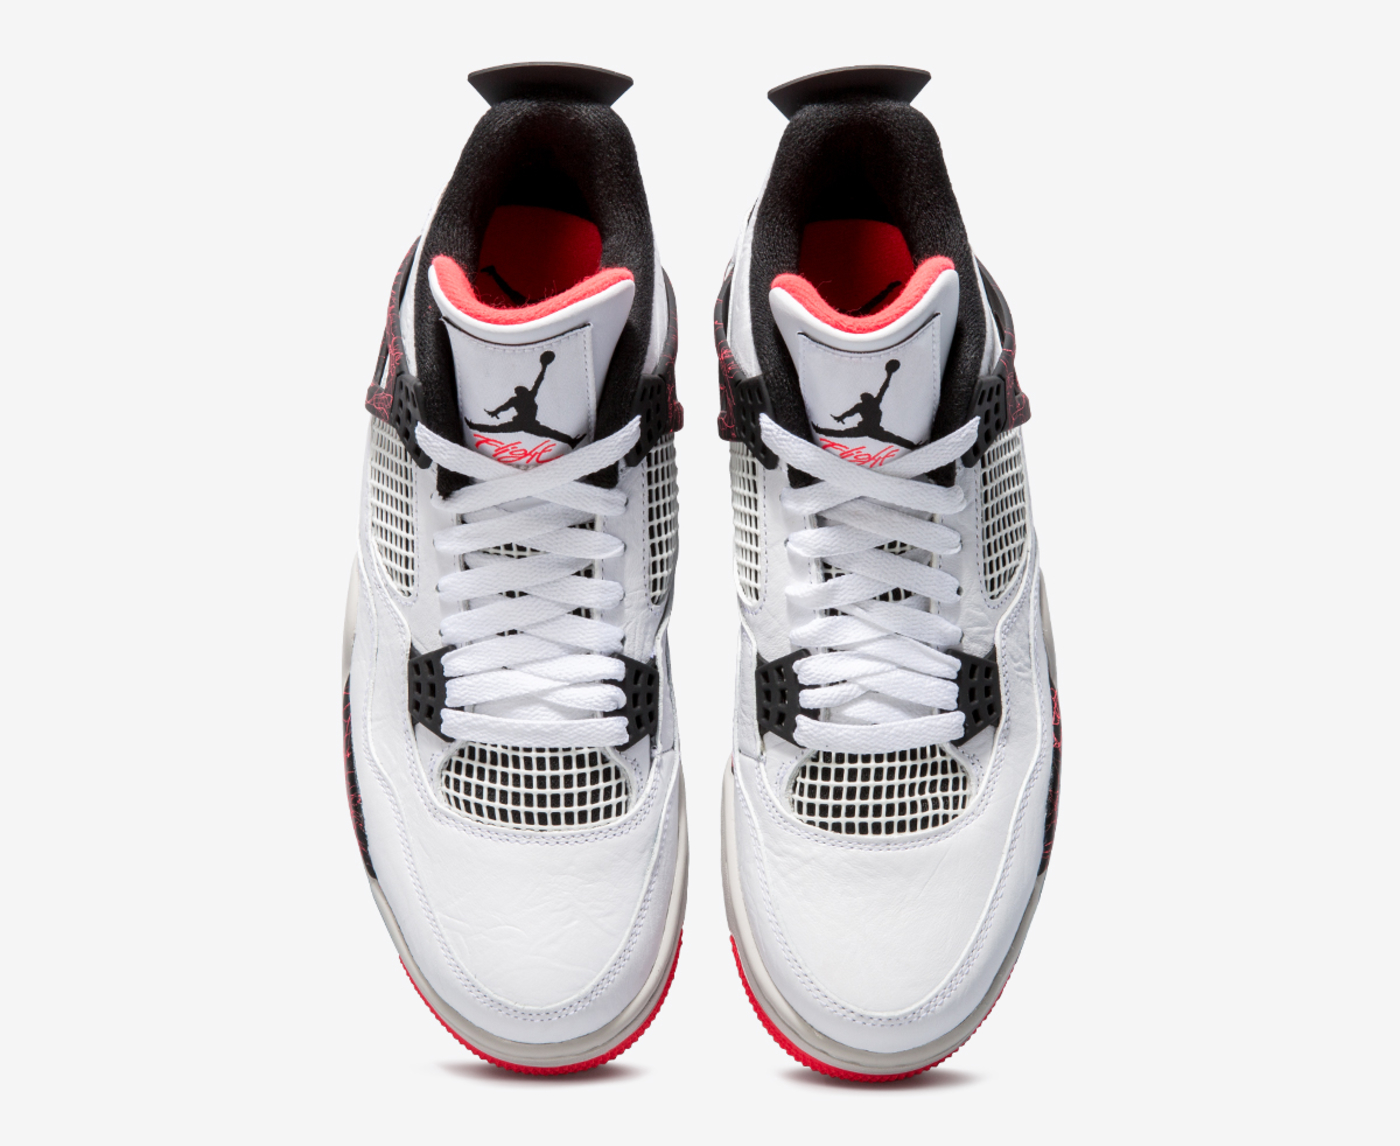 Nike Air Jordan 4 Retro “Hot Lava” Sneakers - White/Bright Crimson/Pale Citron/Black - 12